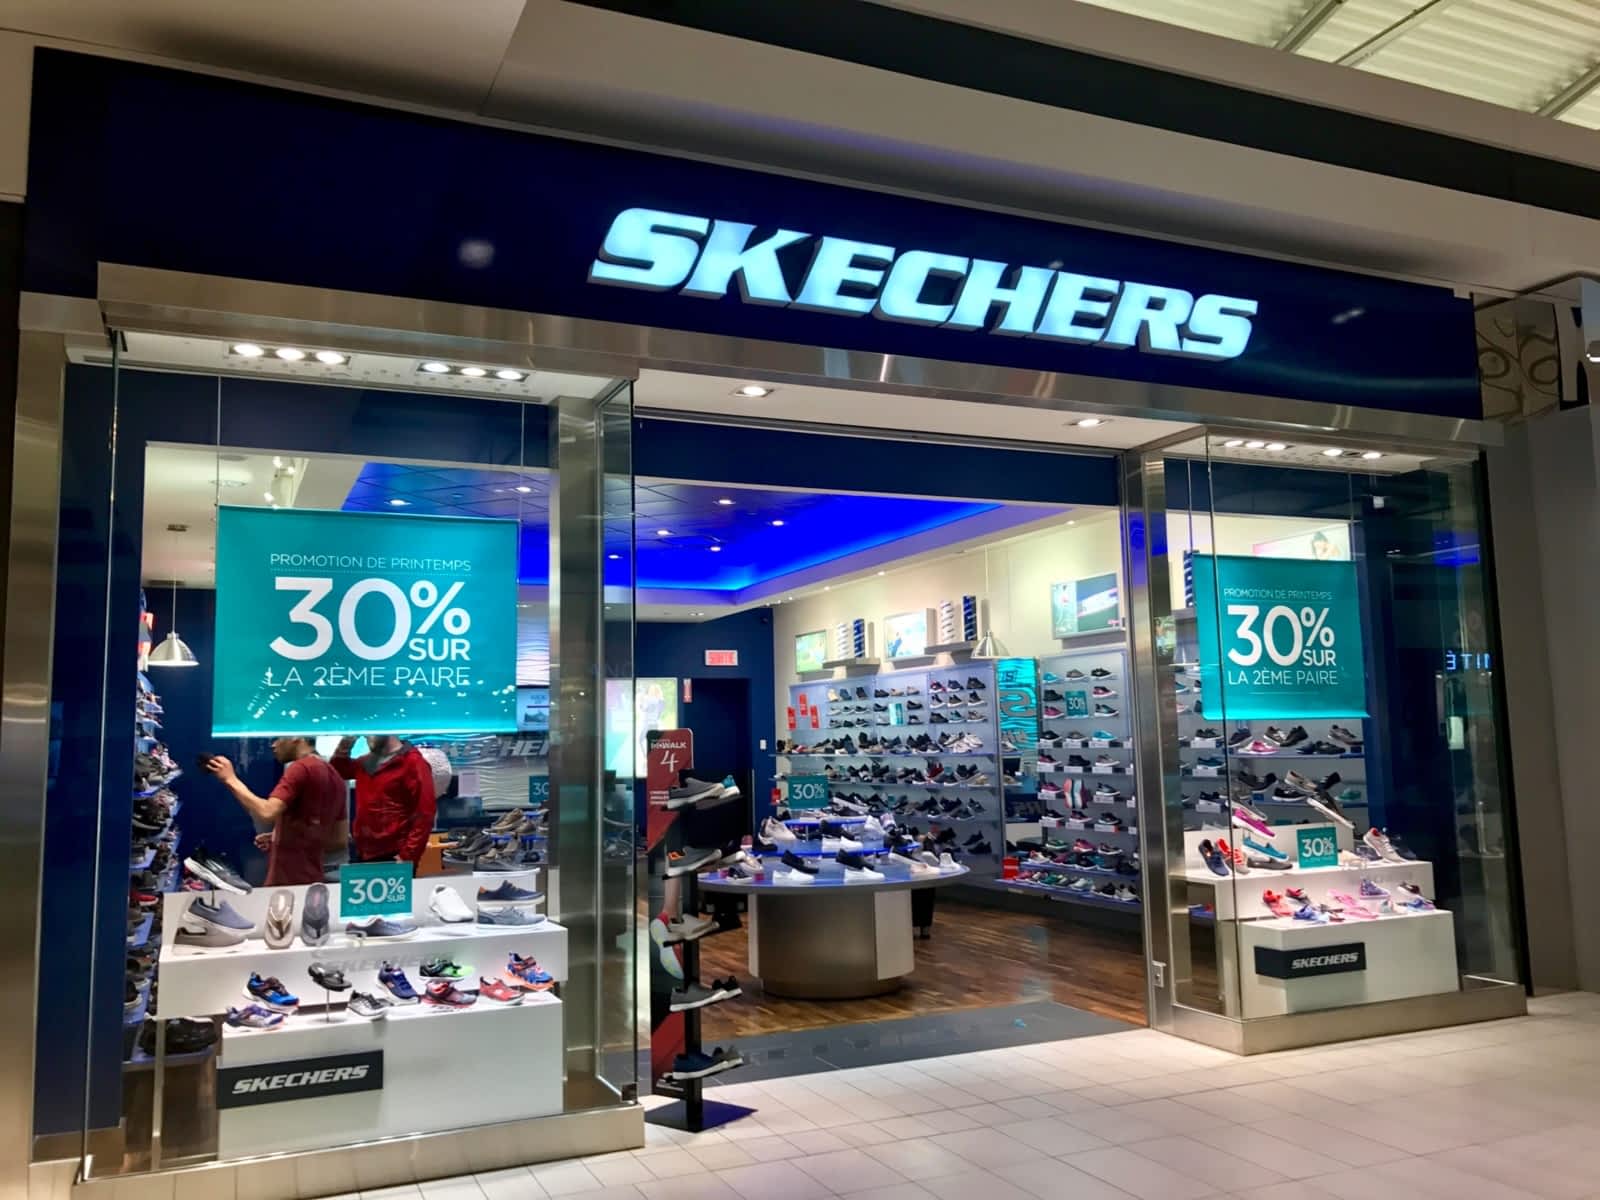 Skechers Calgary Stores 59%.